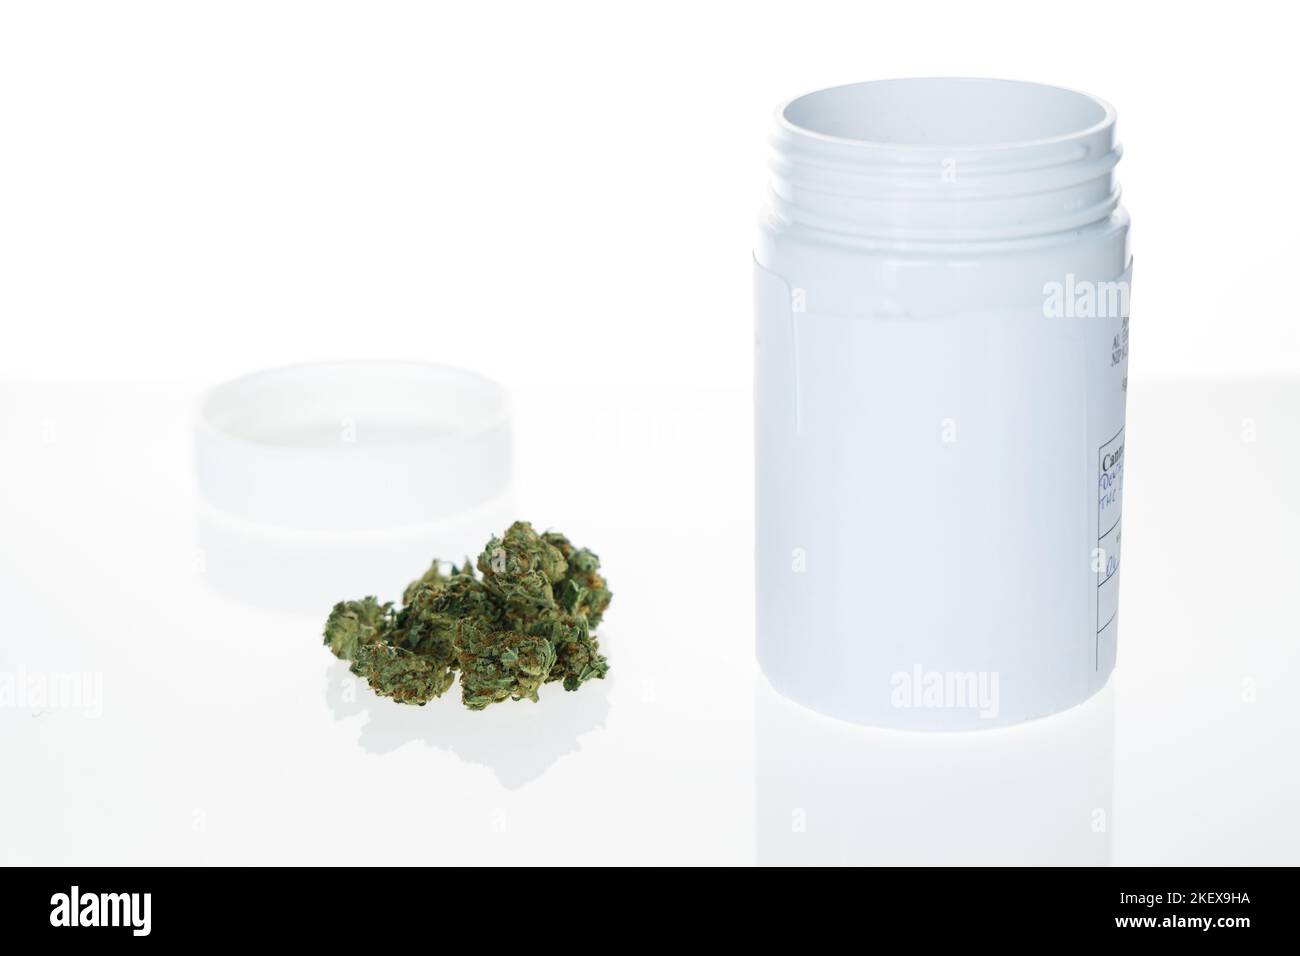 Cannabis flos, medical marijuana next to container on white background Stock Photo